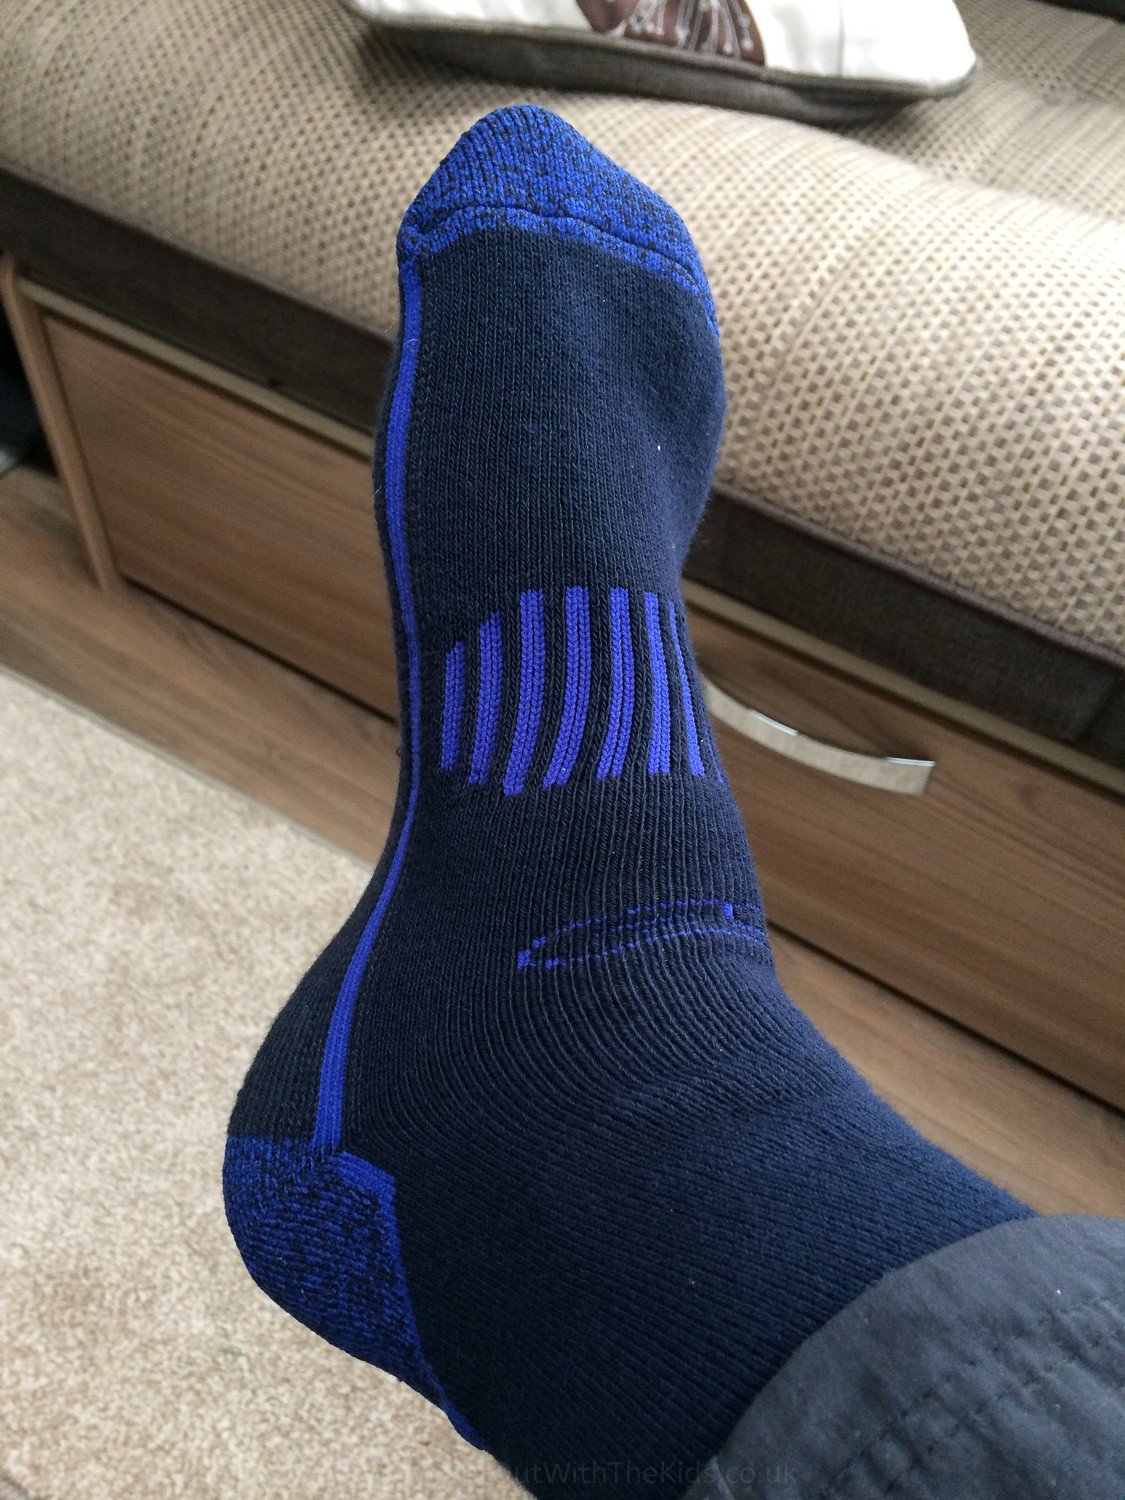 Socks fitting